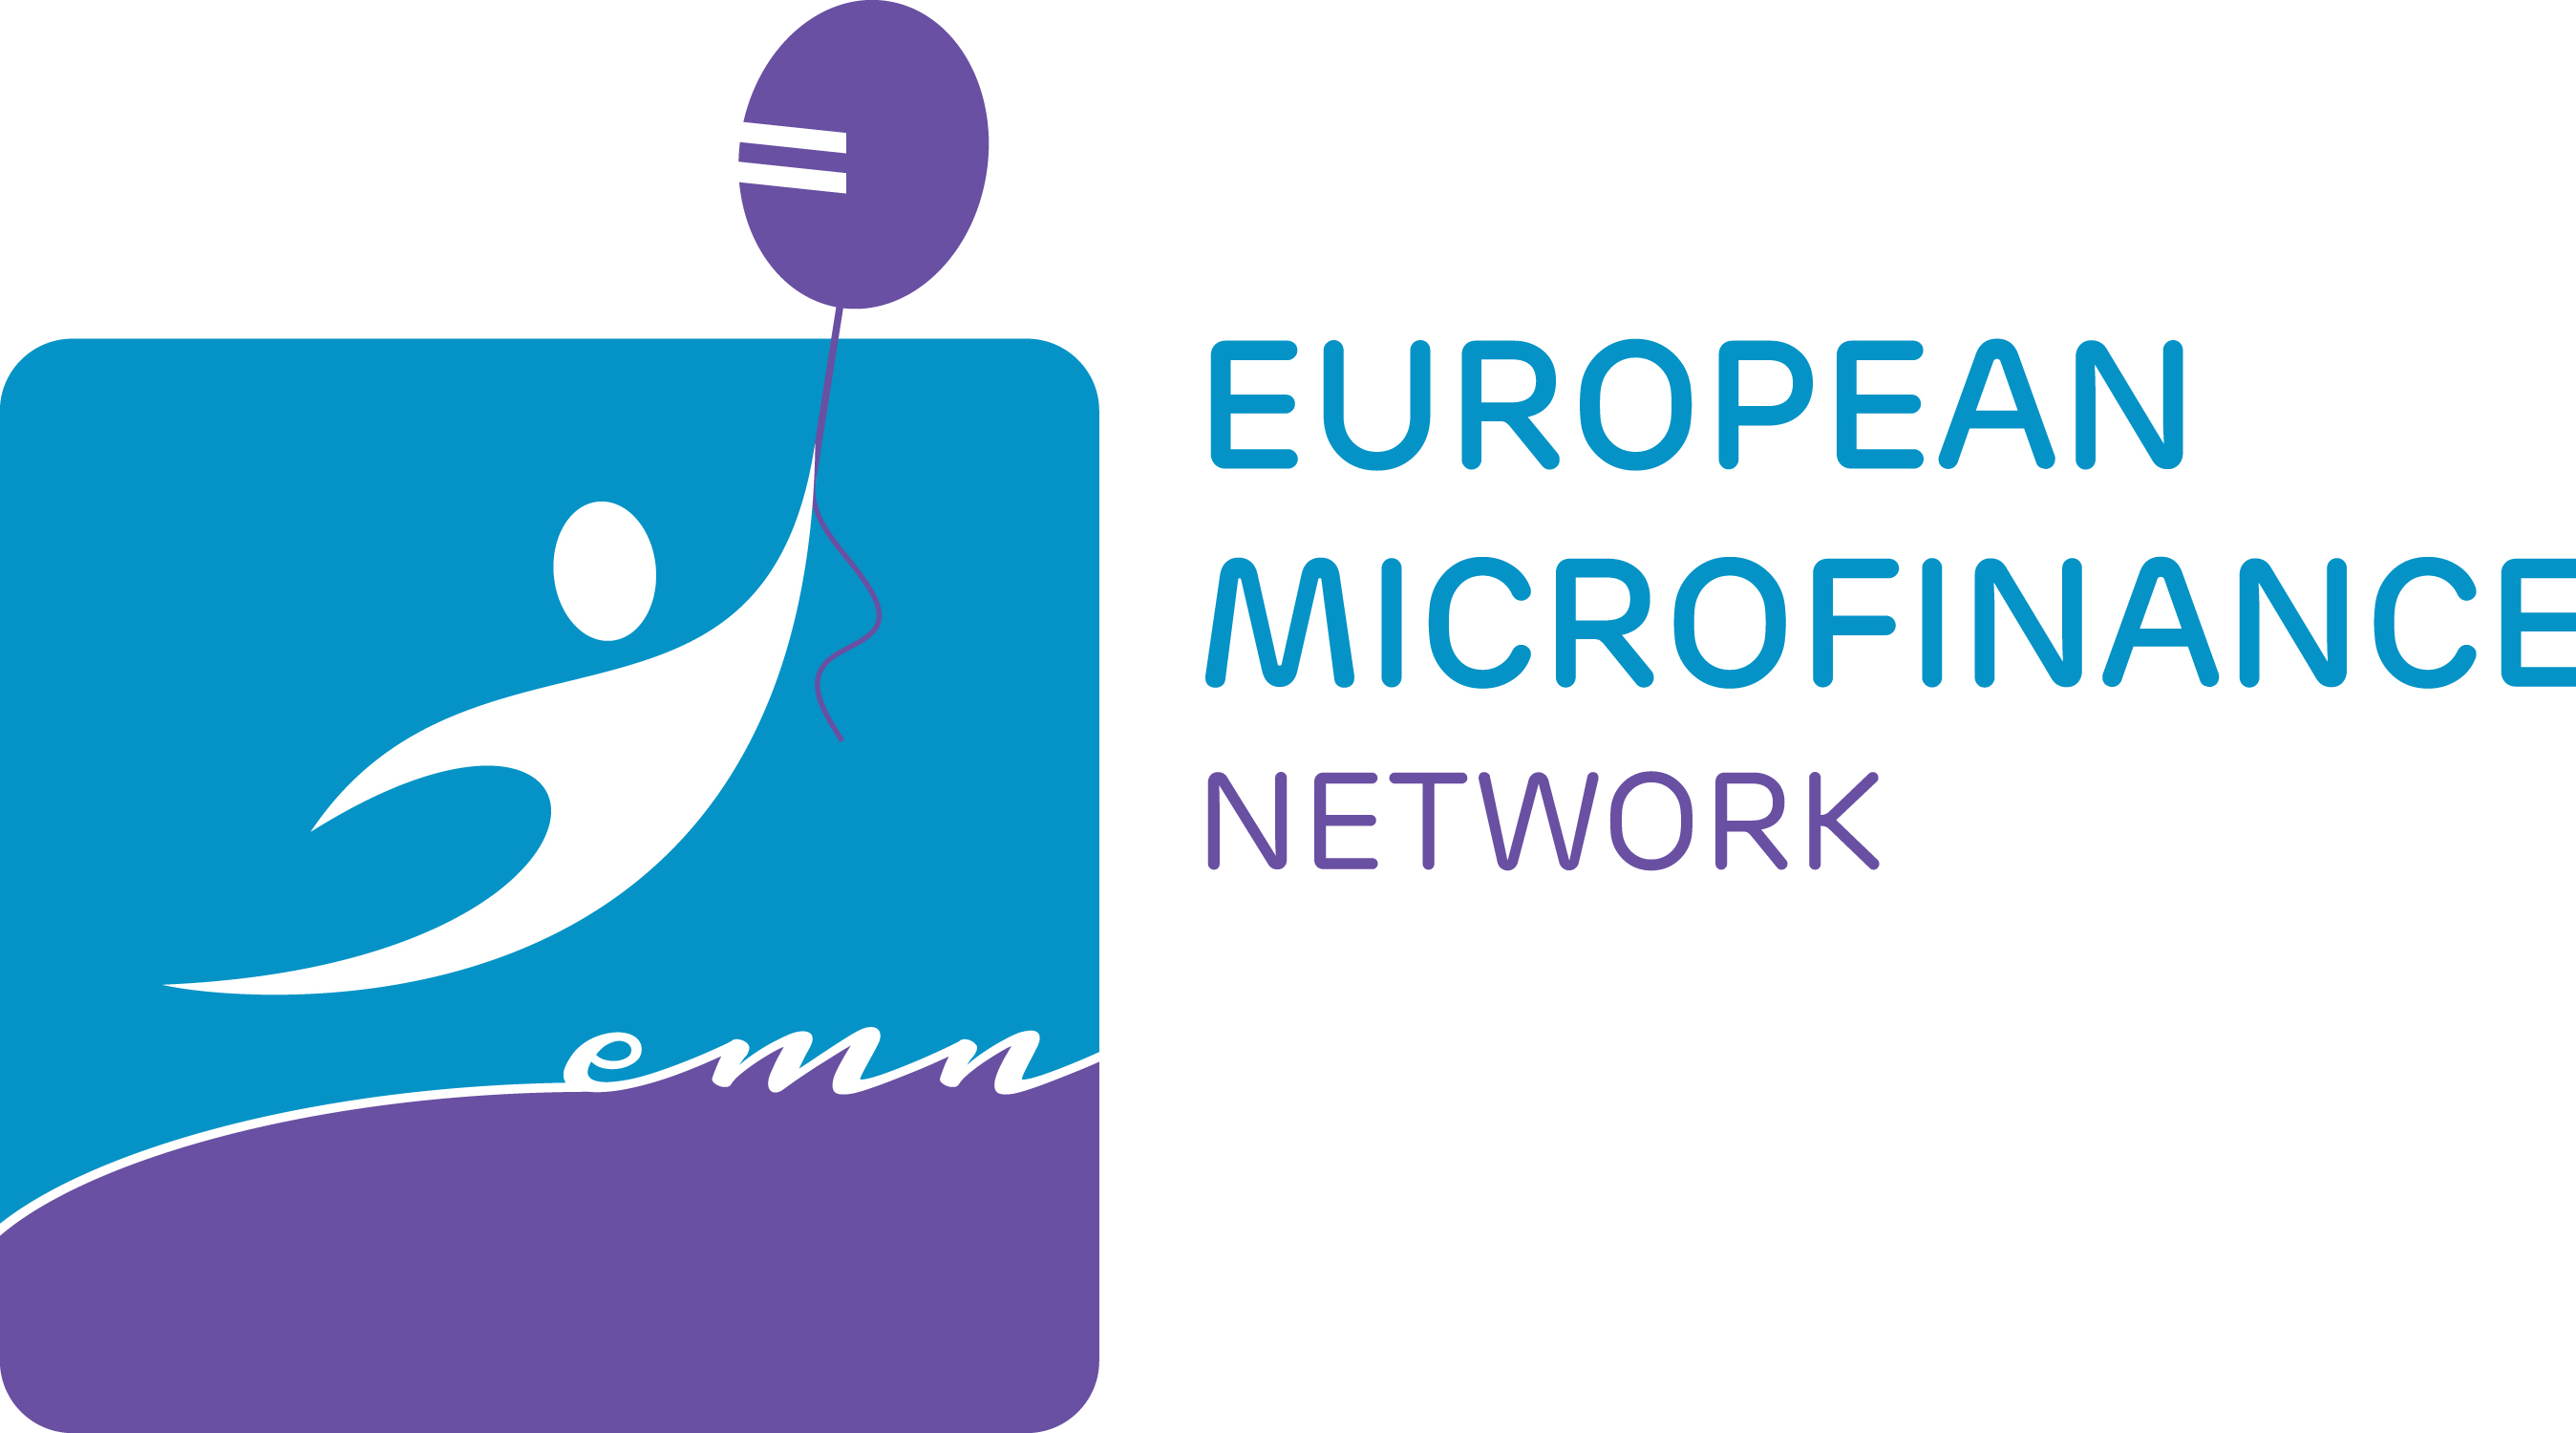 European Microfinance Network